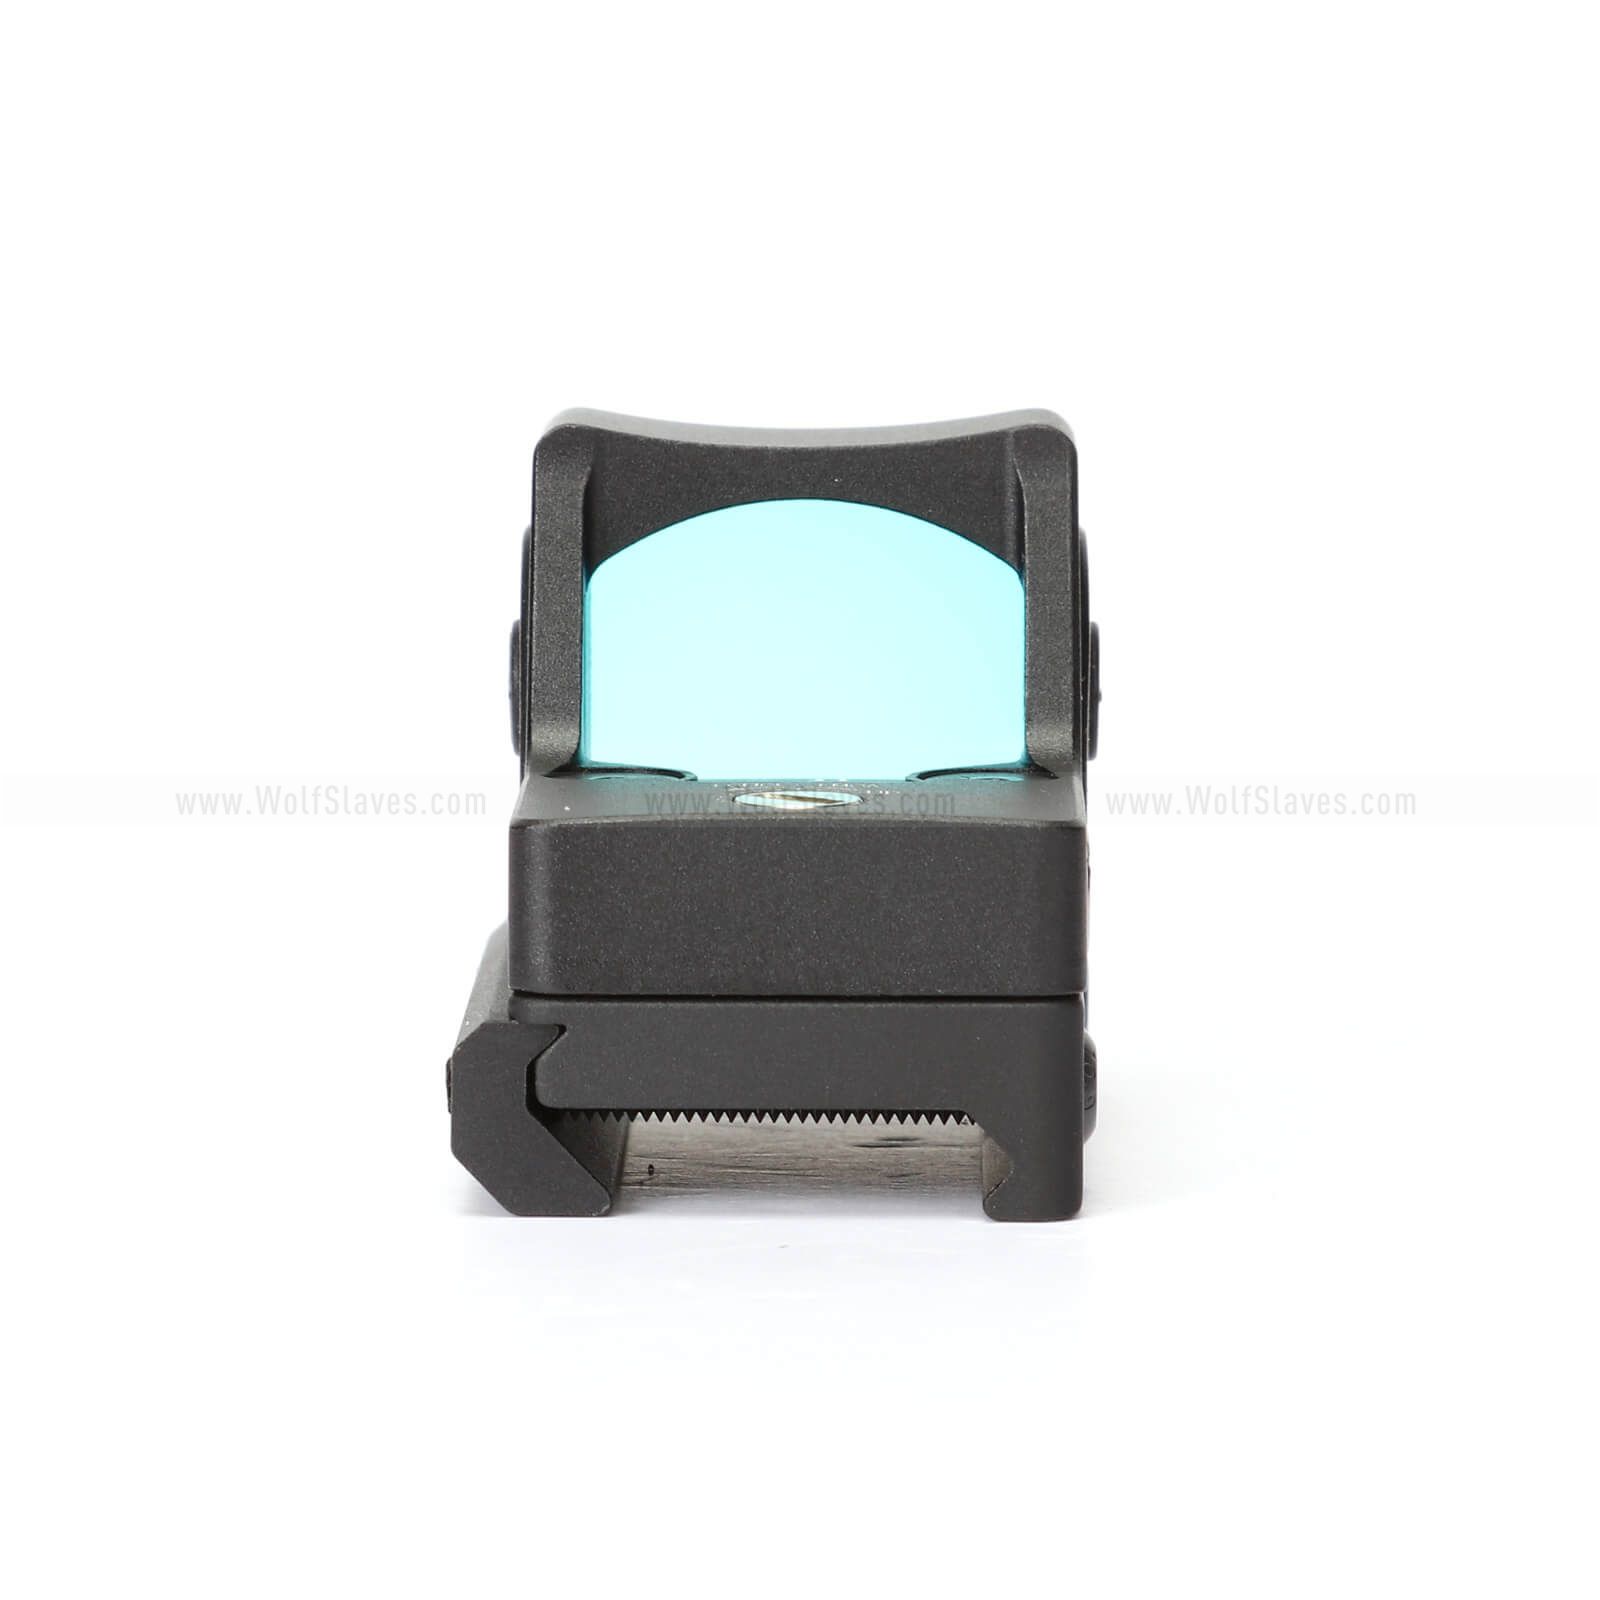 Details about   RMR Red Dot Sight Scope Collimator Glock Reflex Sight Scope Fit 20mm Weaver Rail 